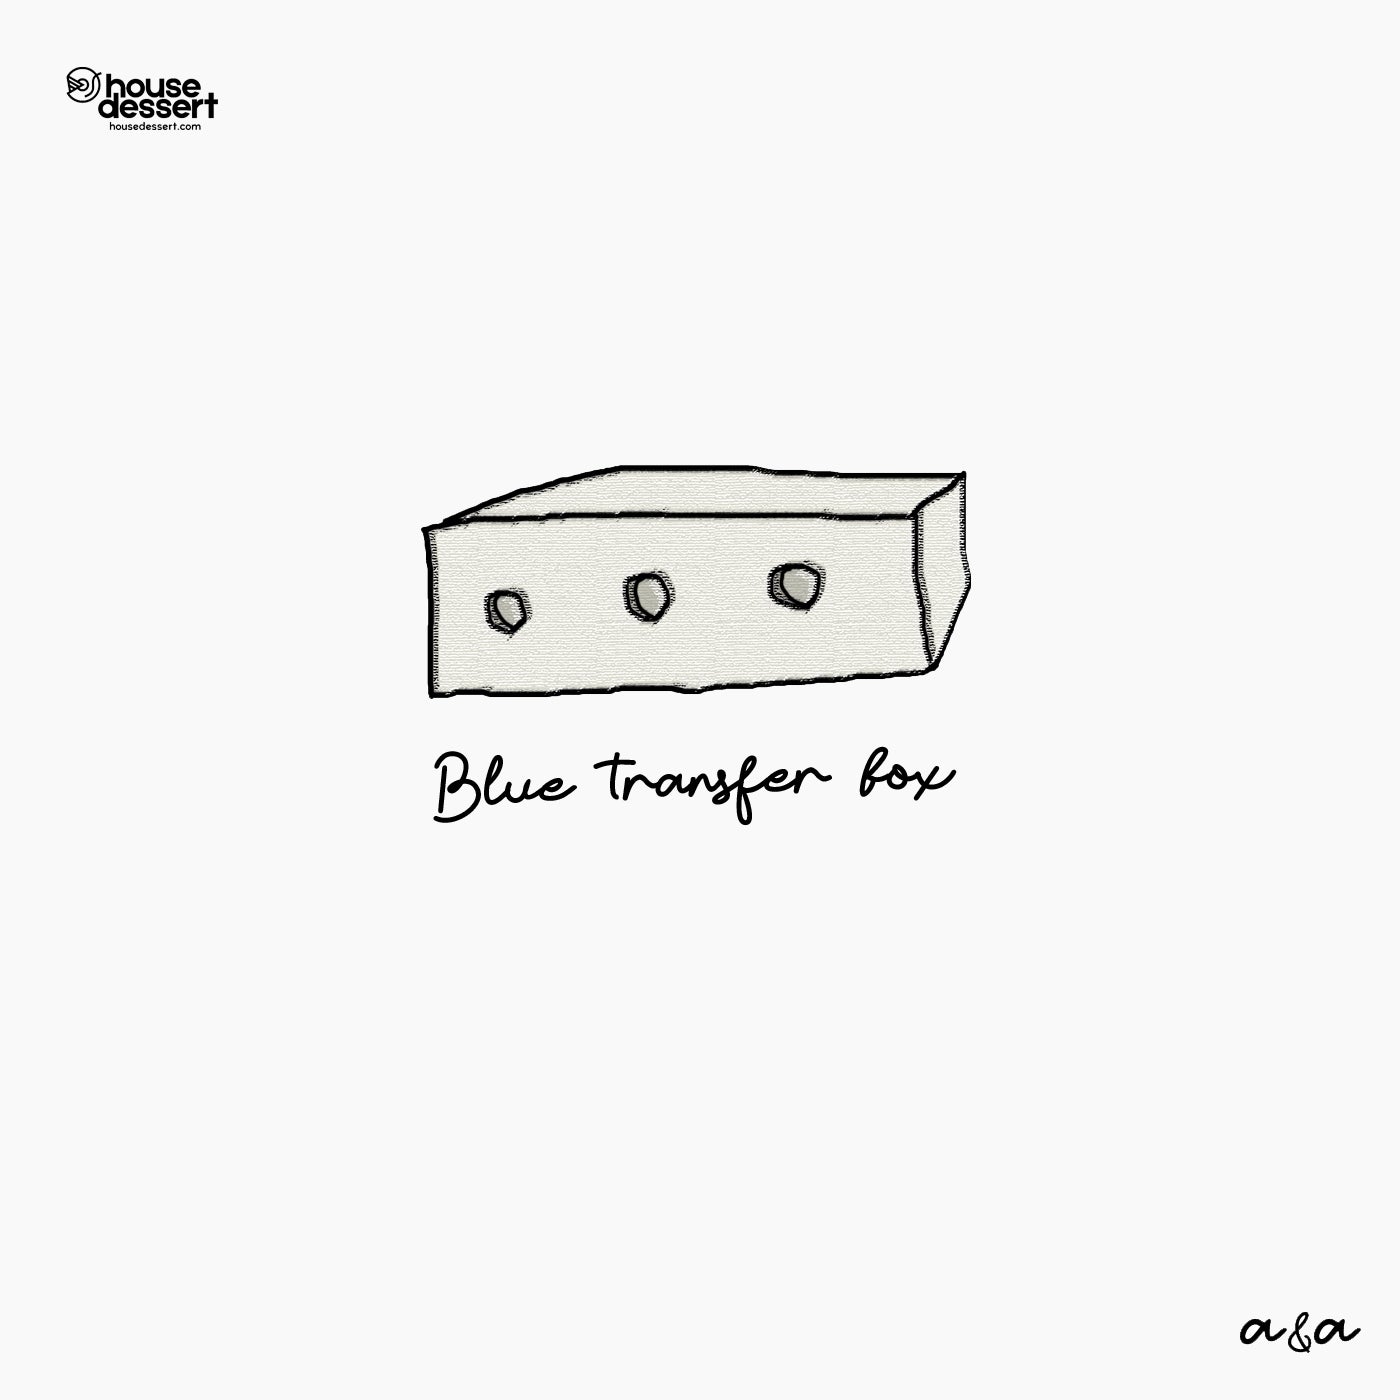 Blue Transfer Box - Original Version